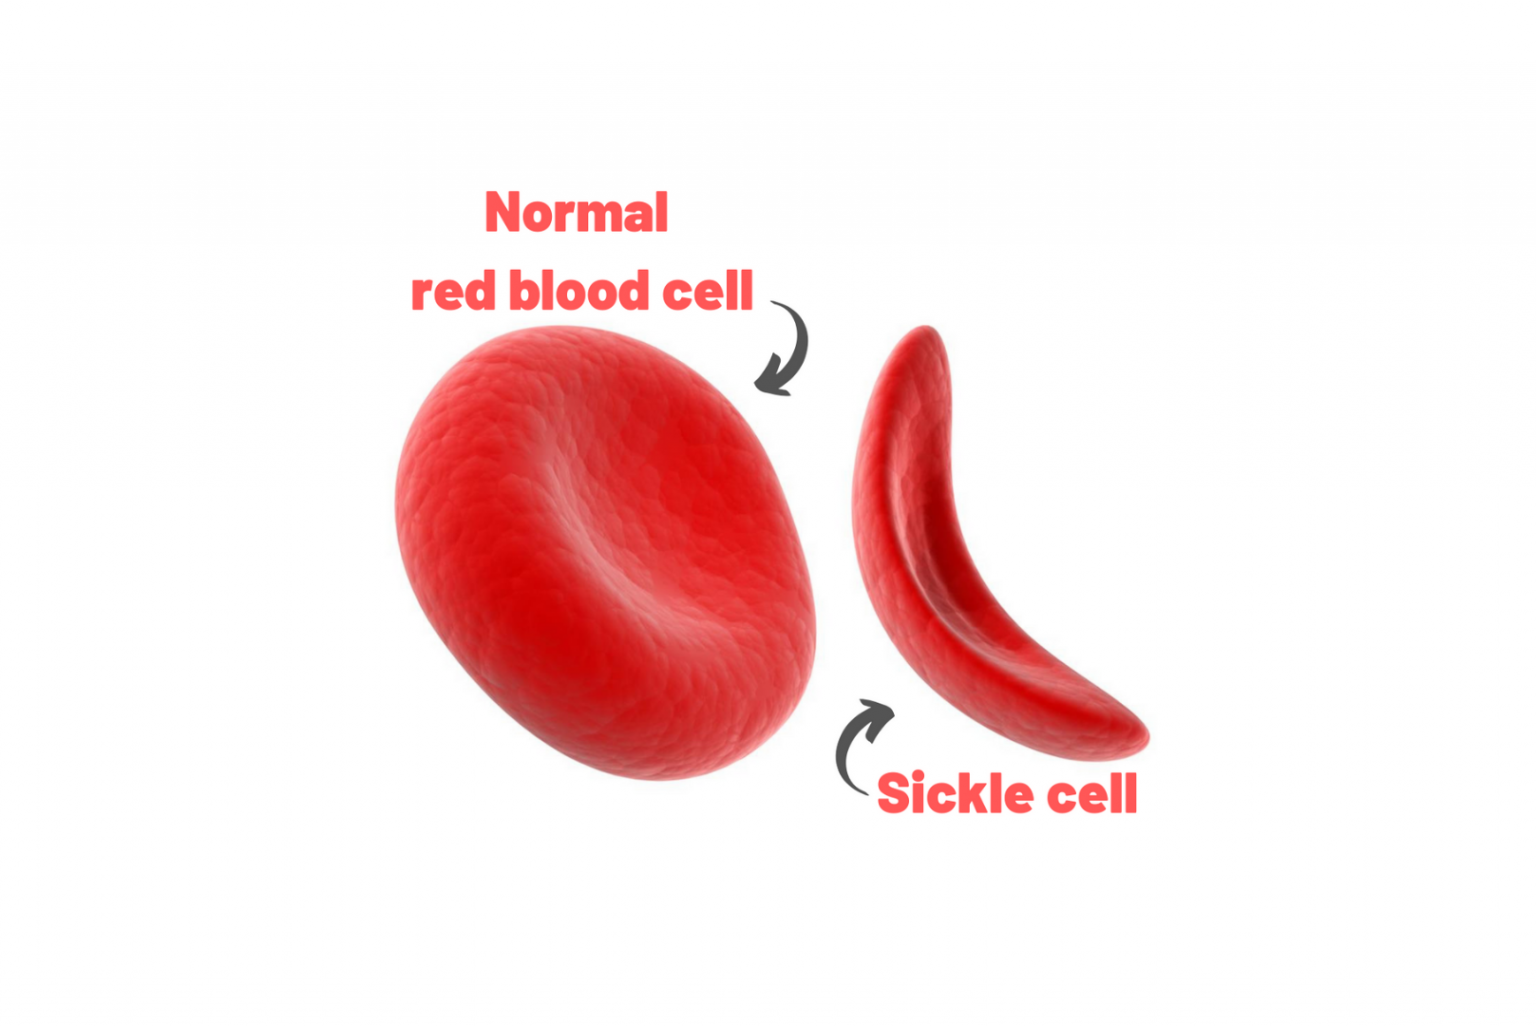 define sickle cell disease